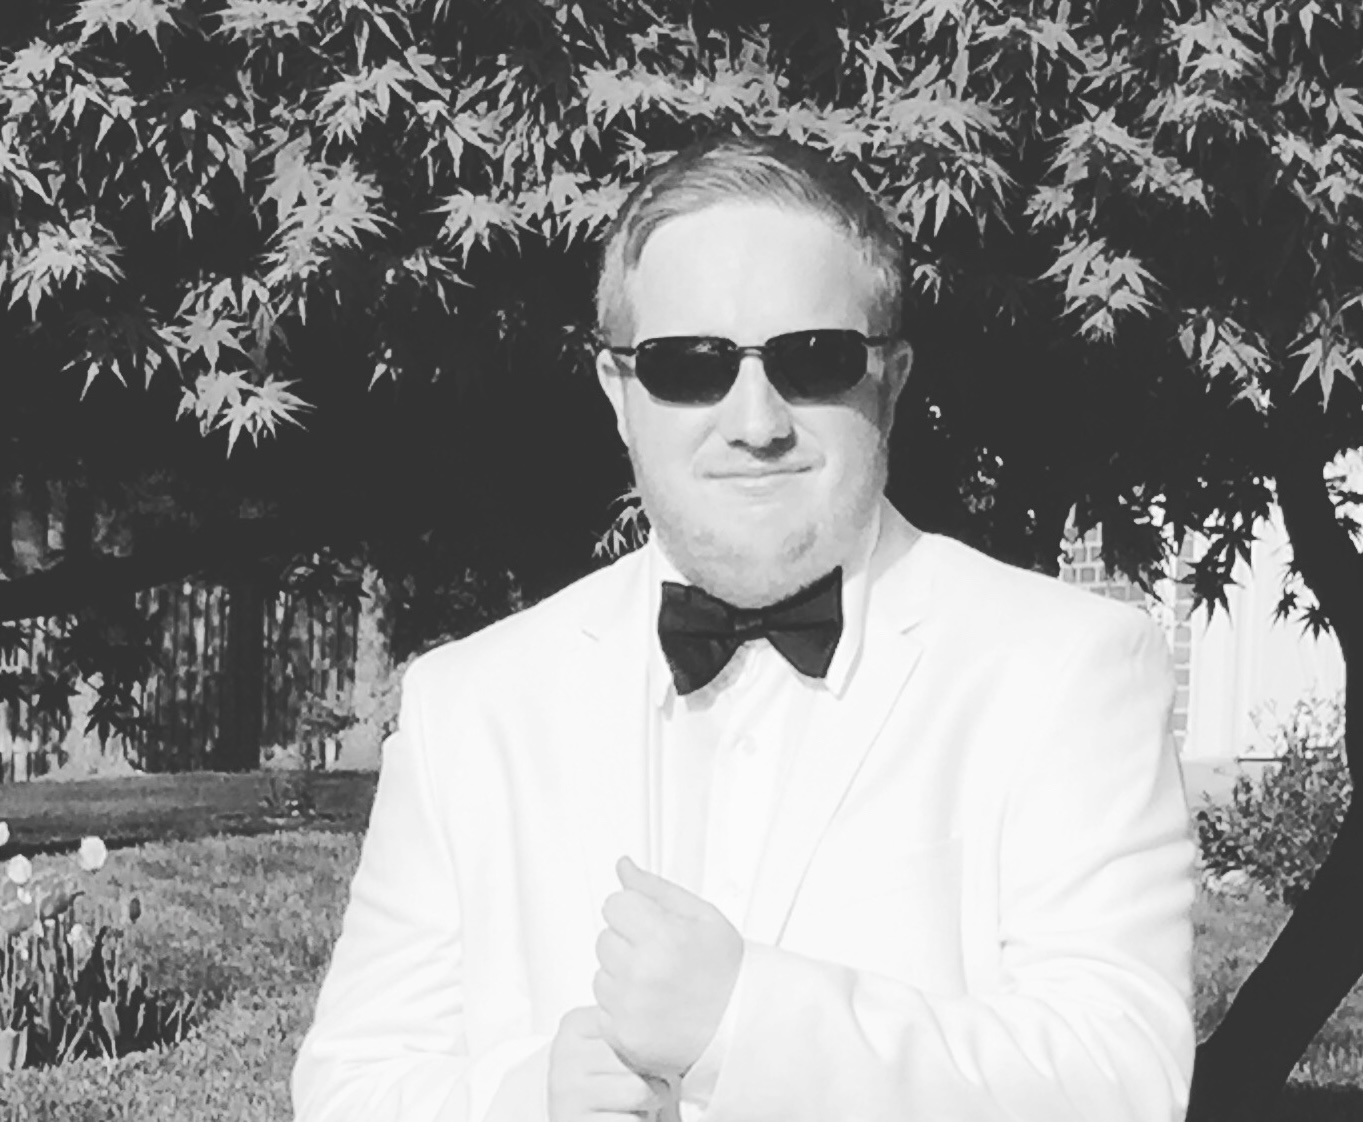 Headshot of Joey Kitchelt in a white tuxedo